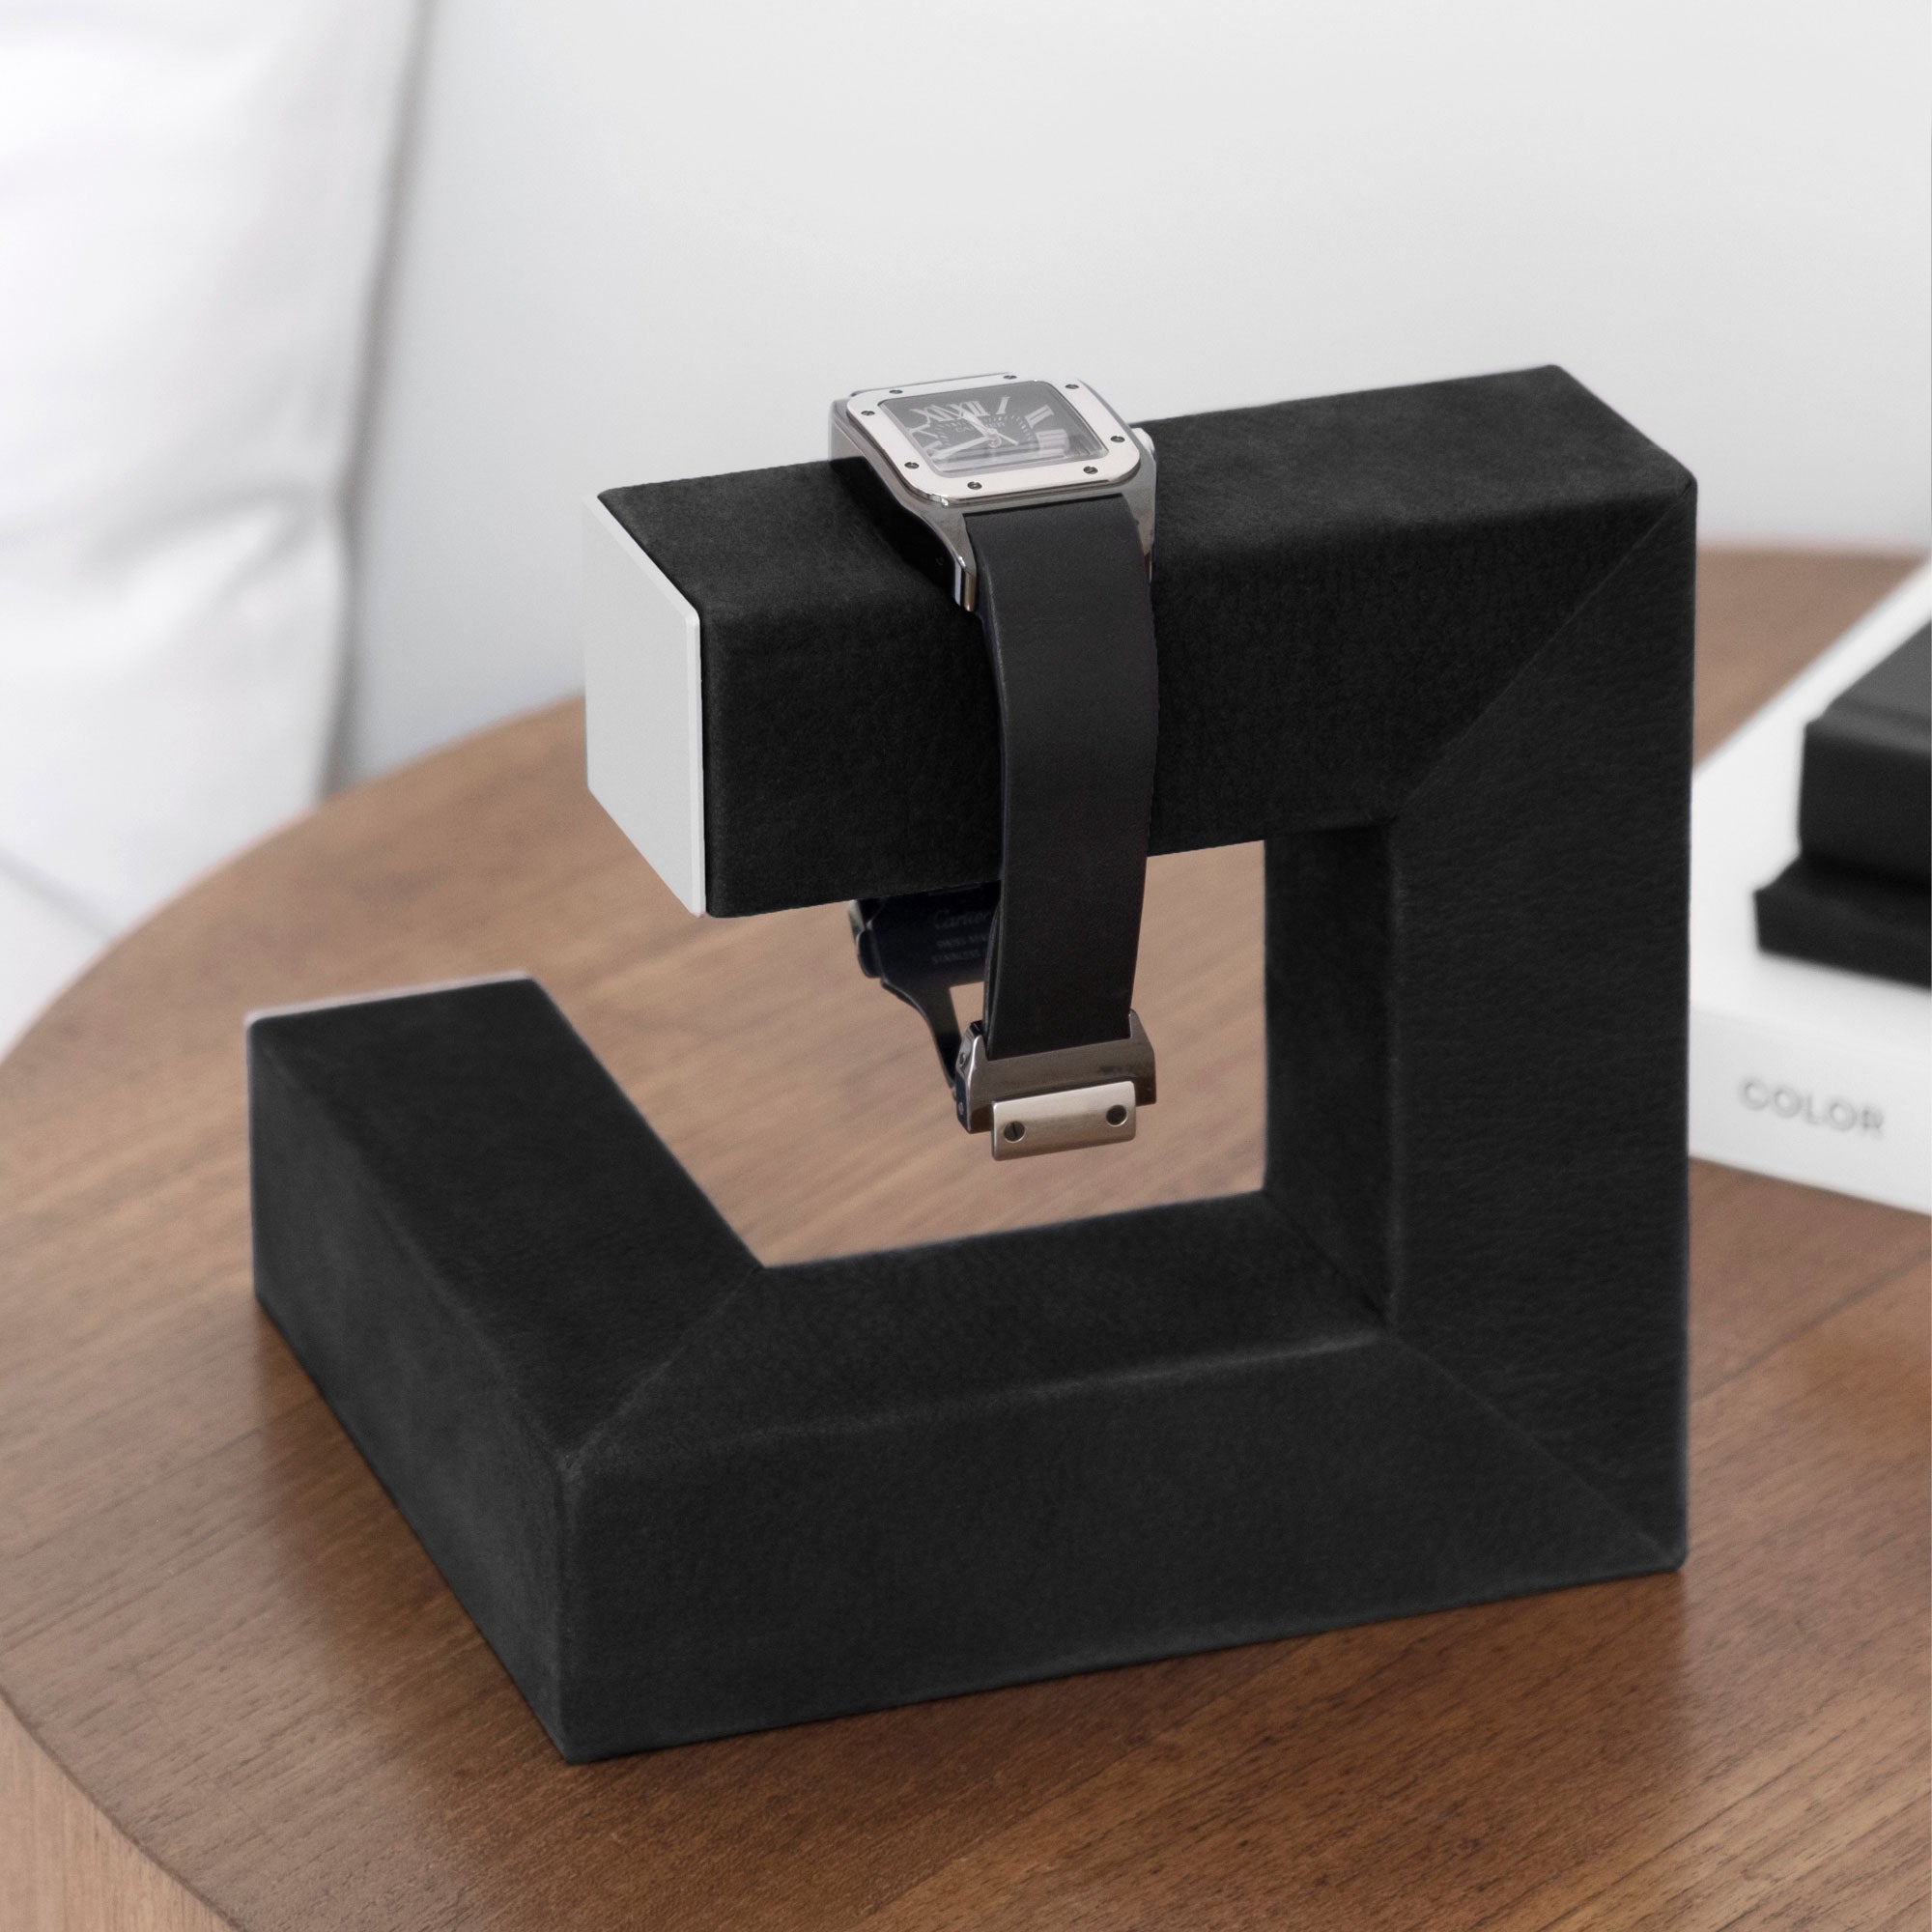 Luxury watch being displayed on the elegant black Hudson 1 Watch stand